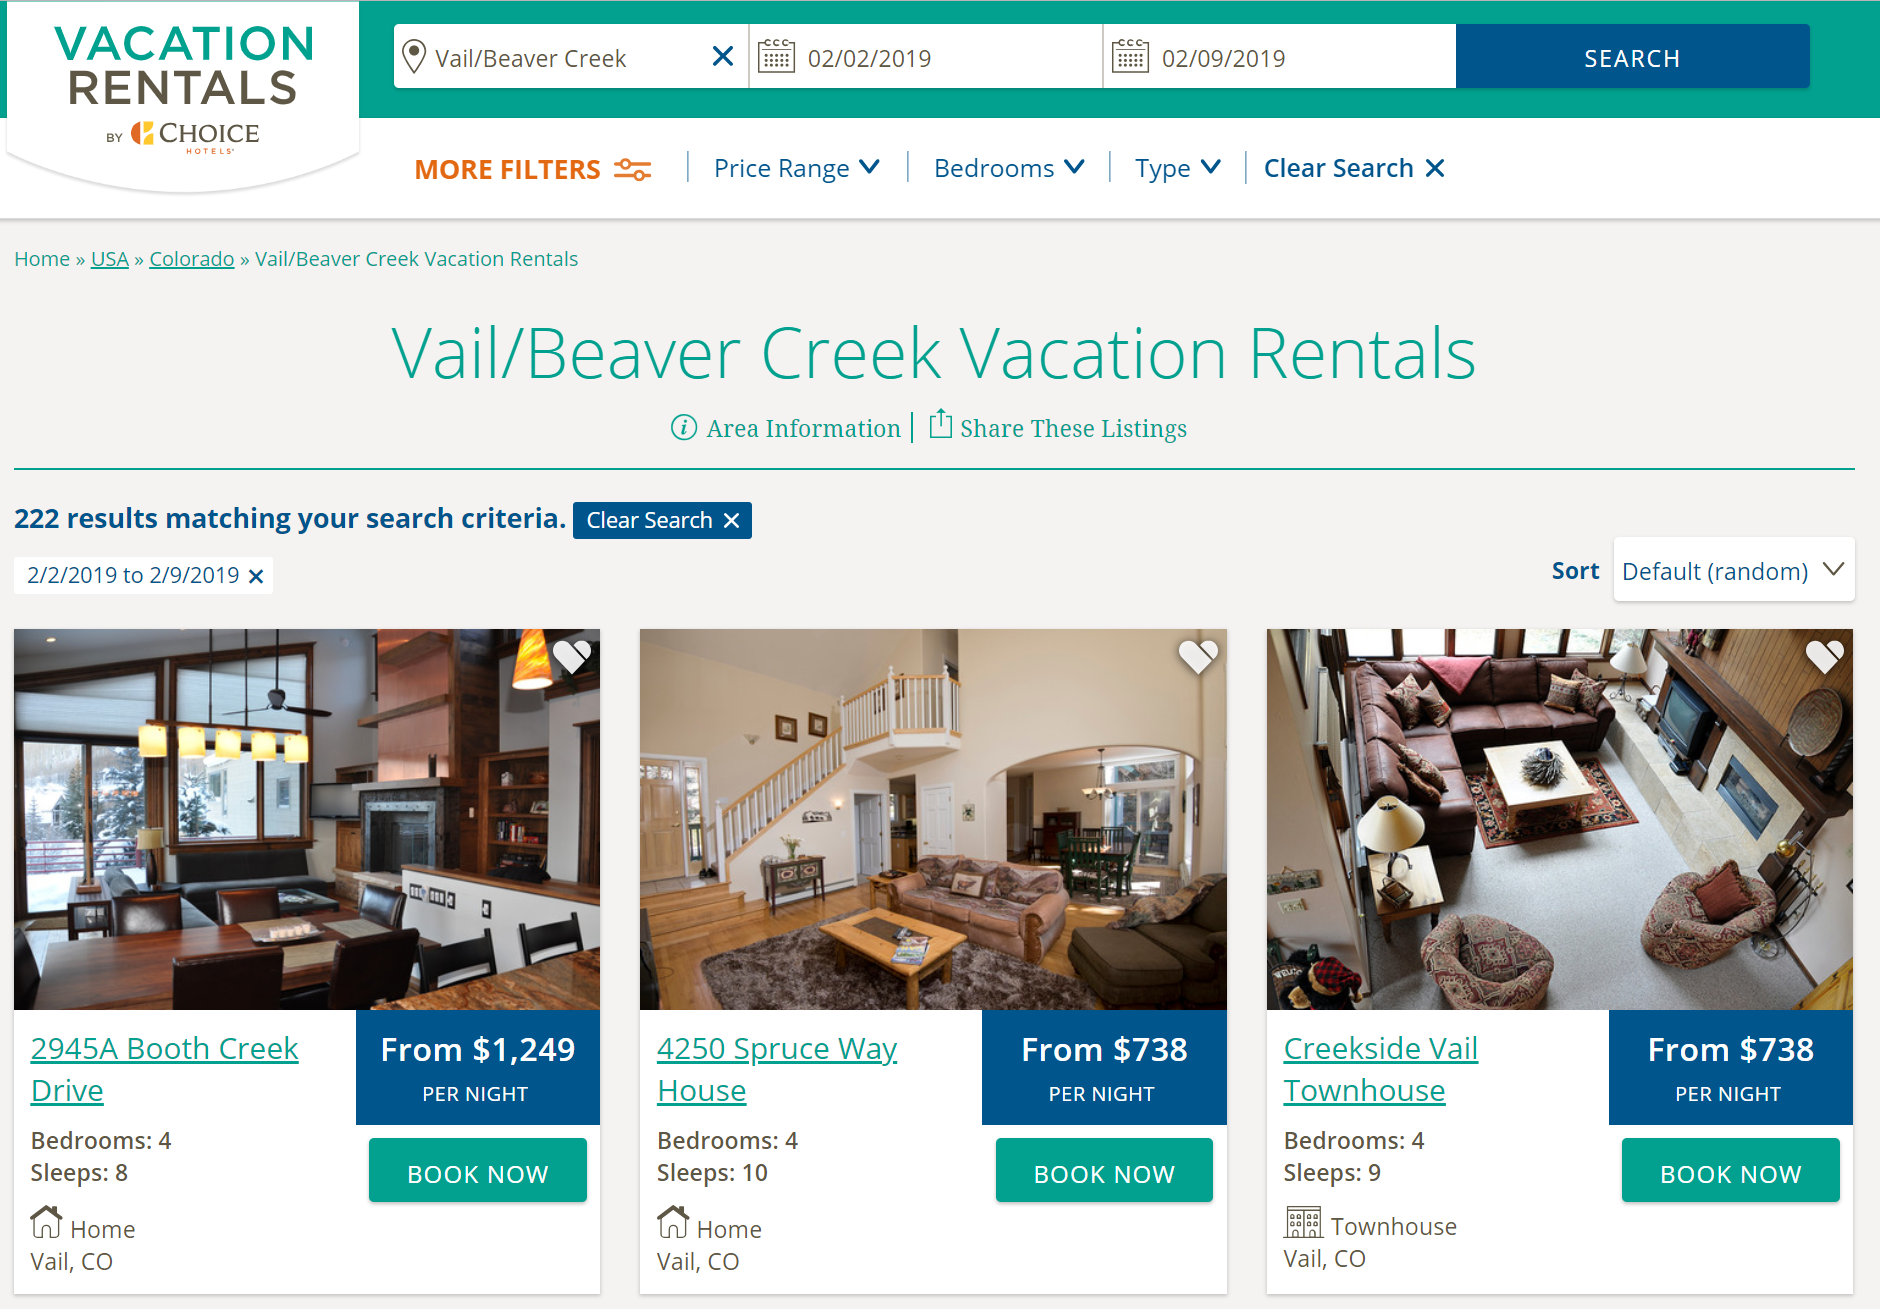 Vacation Rentals by Choice Hotels 10,000 bonus points | Loyalty Traveler